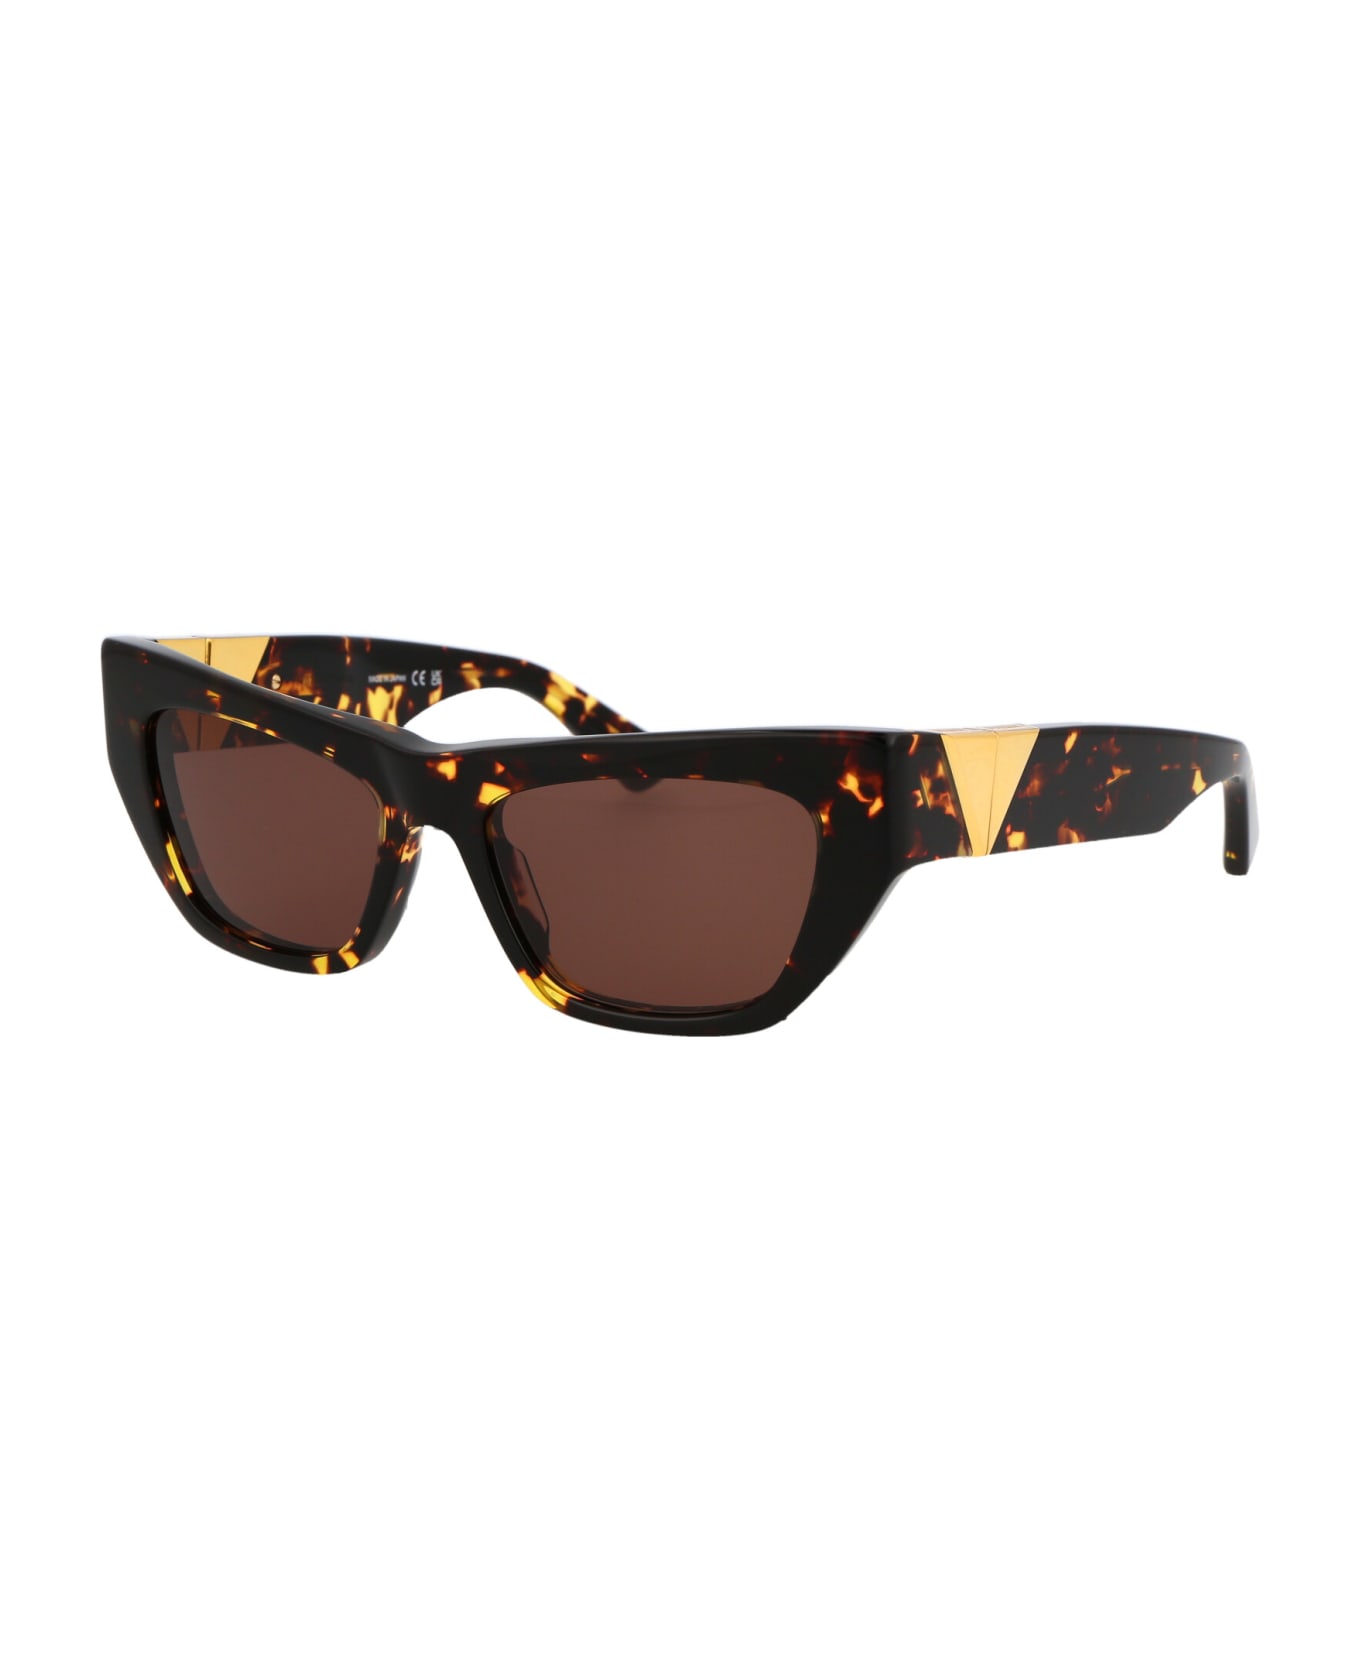 Bottega Veneta Eyewear Bv1177s Sunglasses - 002 HAVANA HAVANA BROWN サングラス